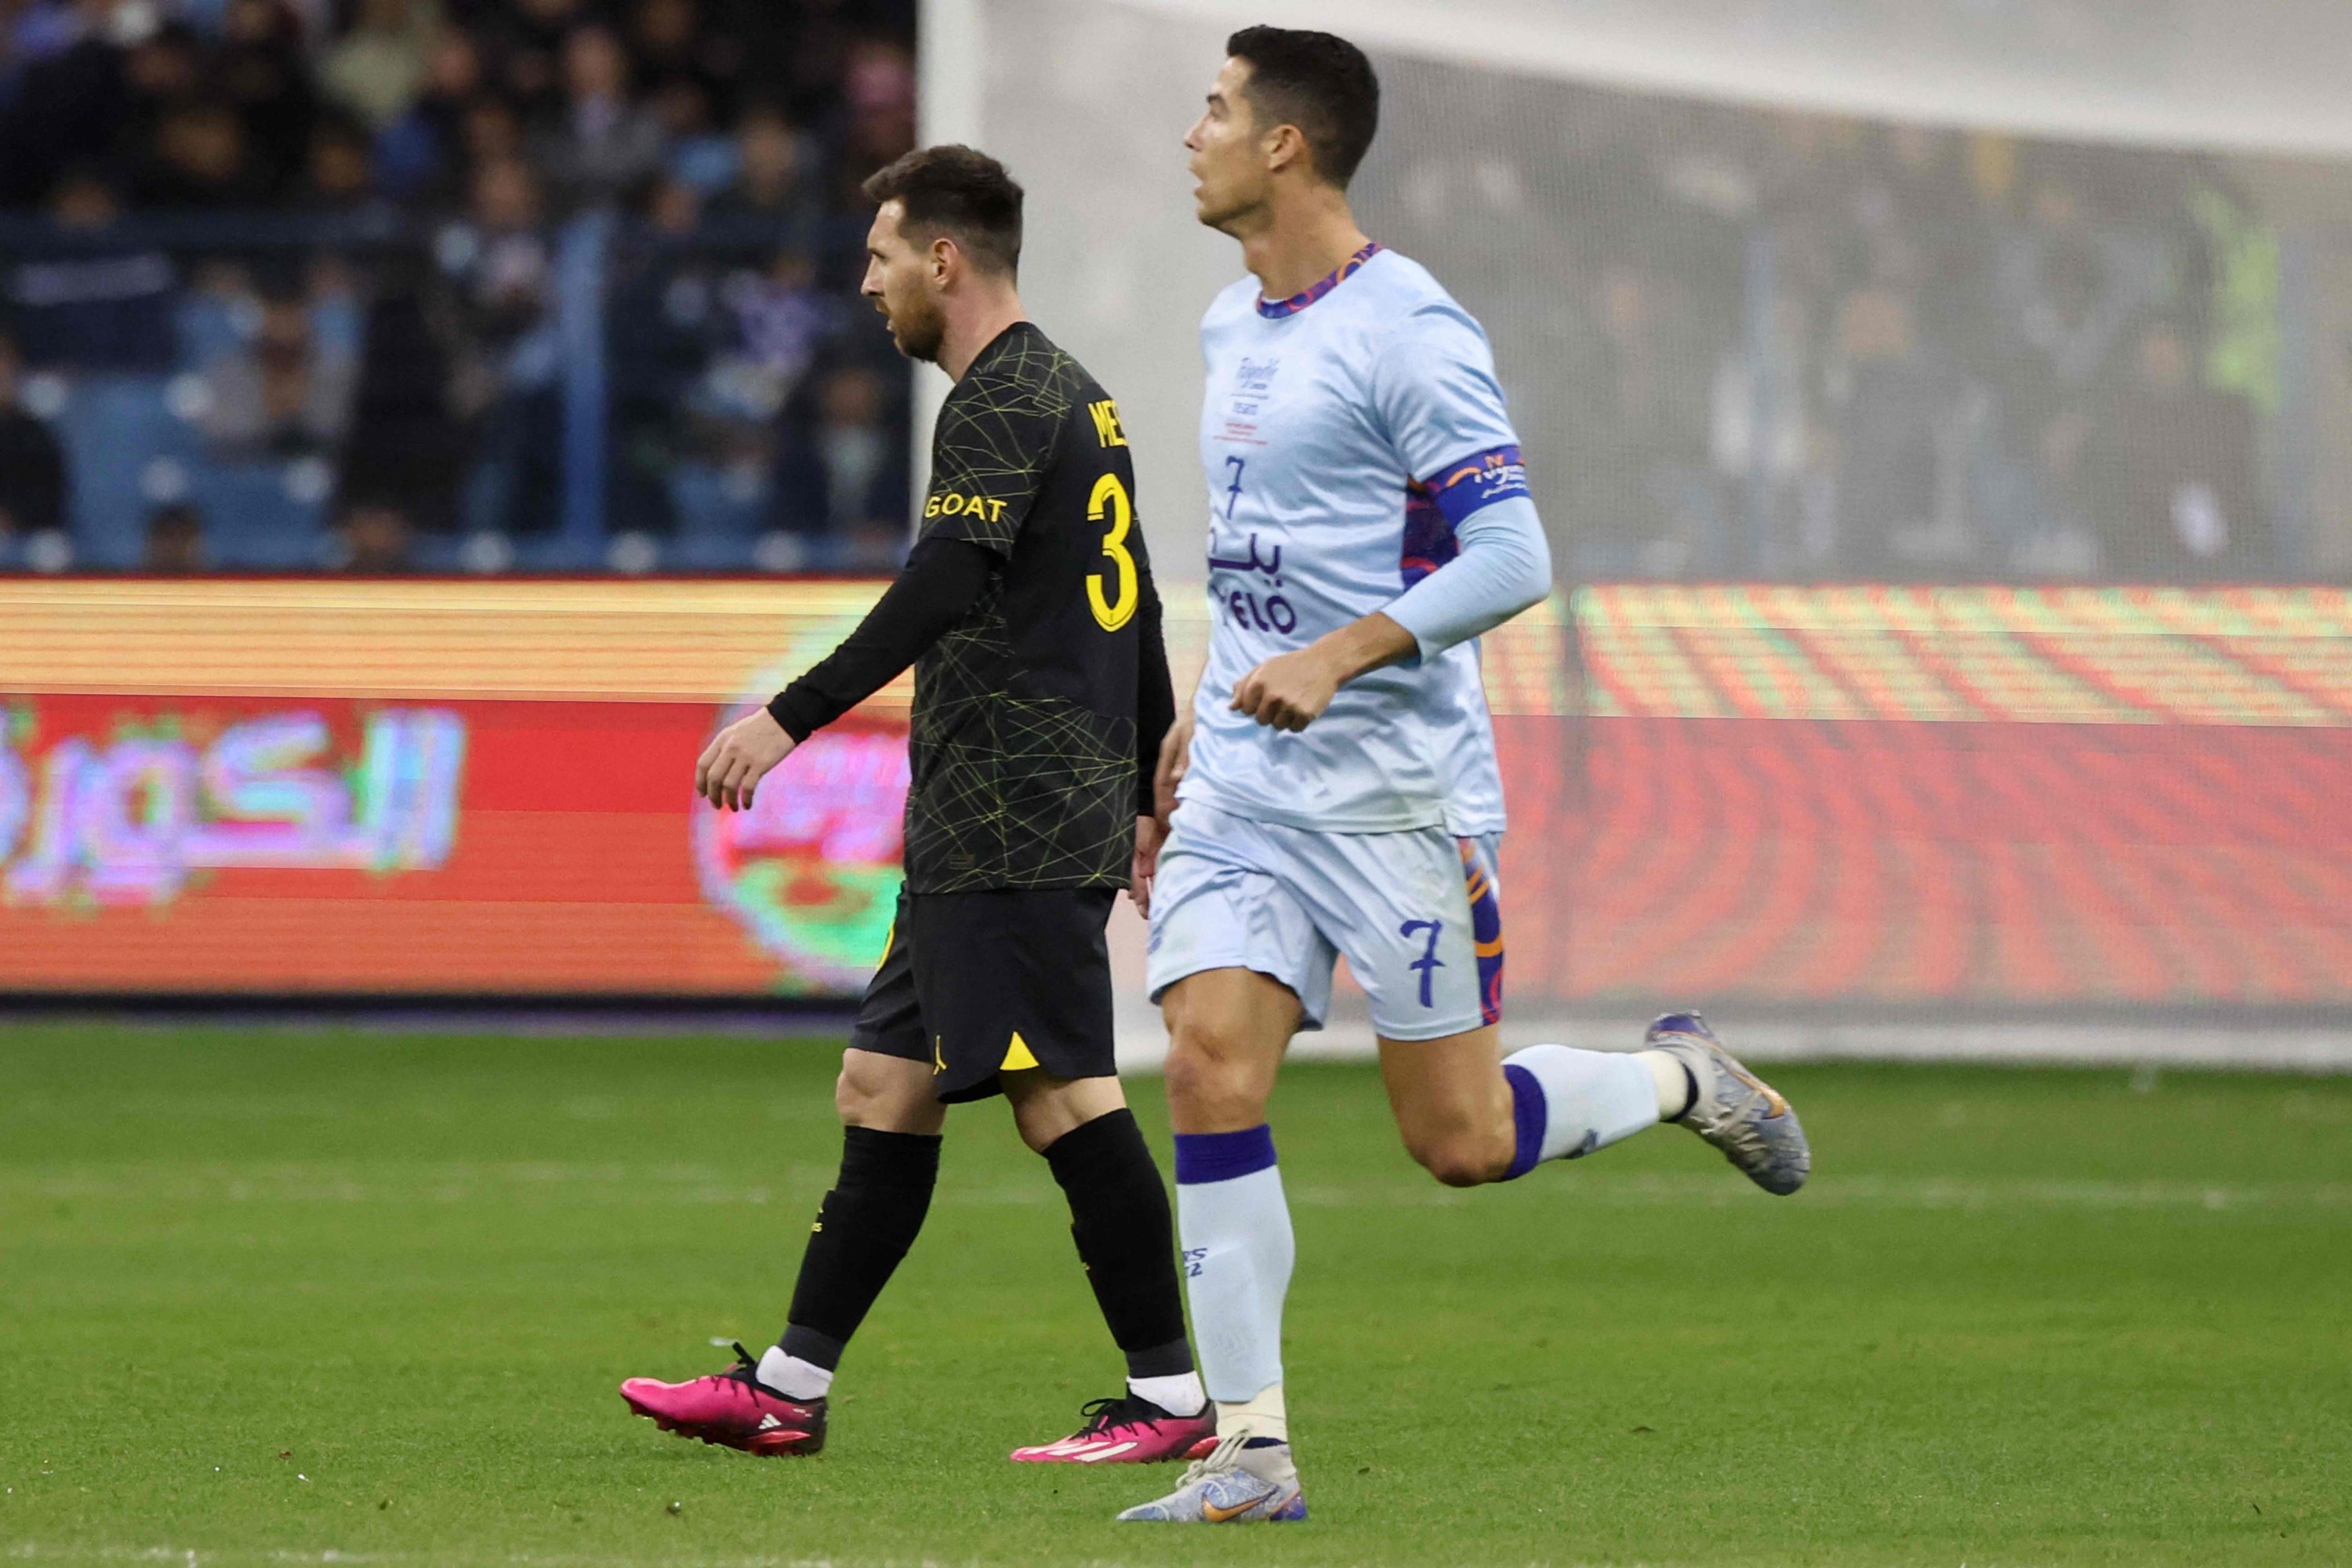 Ronaldo-Messi reunion rolls back the years in 9-goal showdown